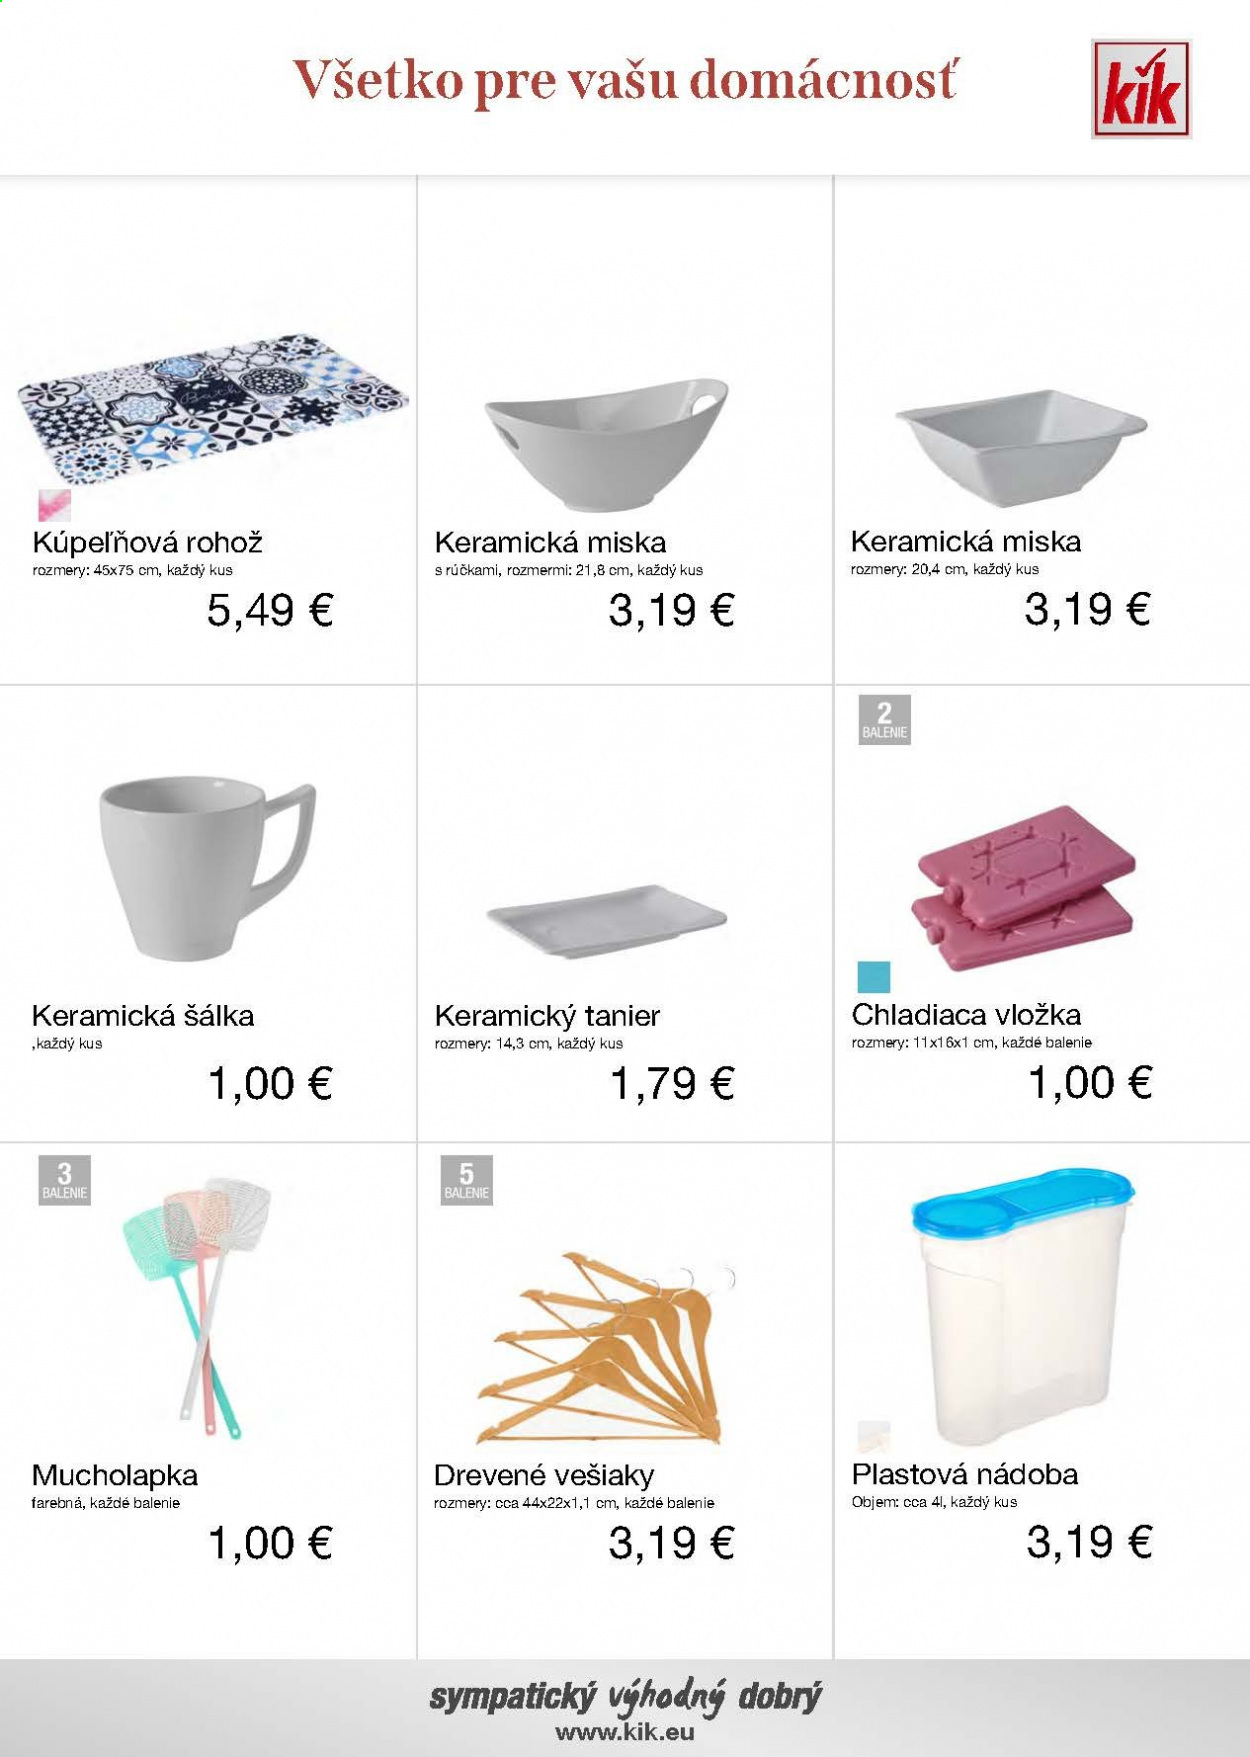 thumbnail - Leták kik - Produkty v akcii - nádoba, tanier, miska, šálek, chladiaca vložka, vešiak. Strana 10.